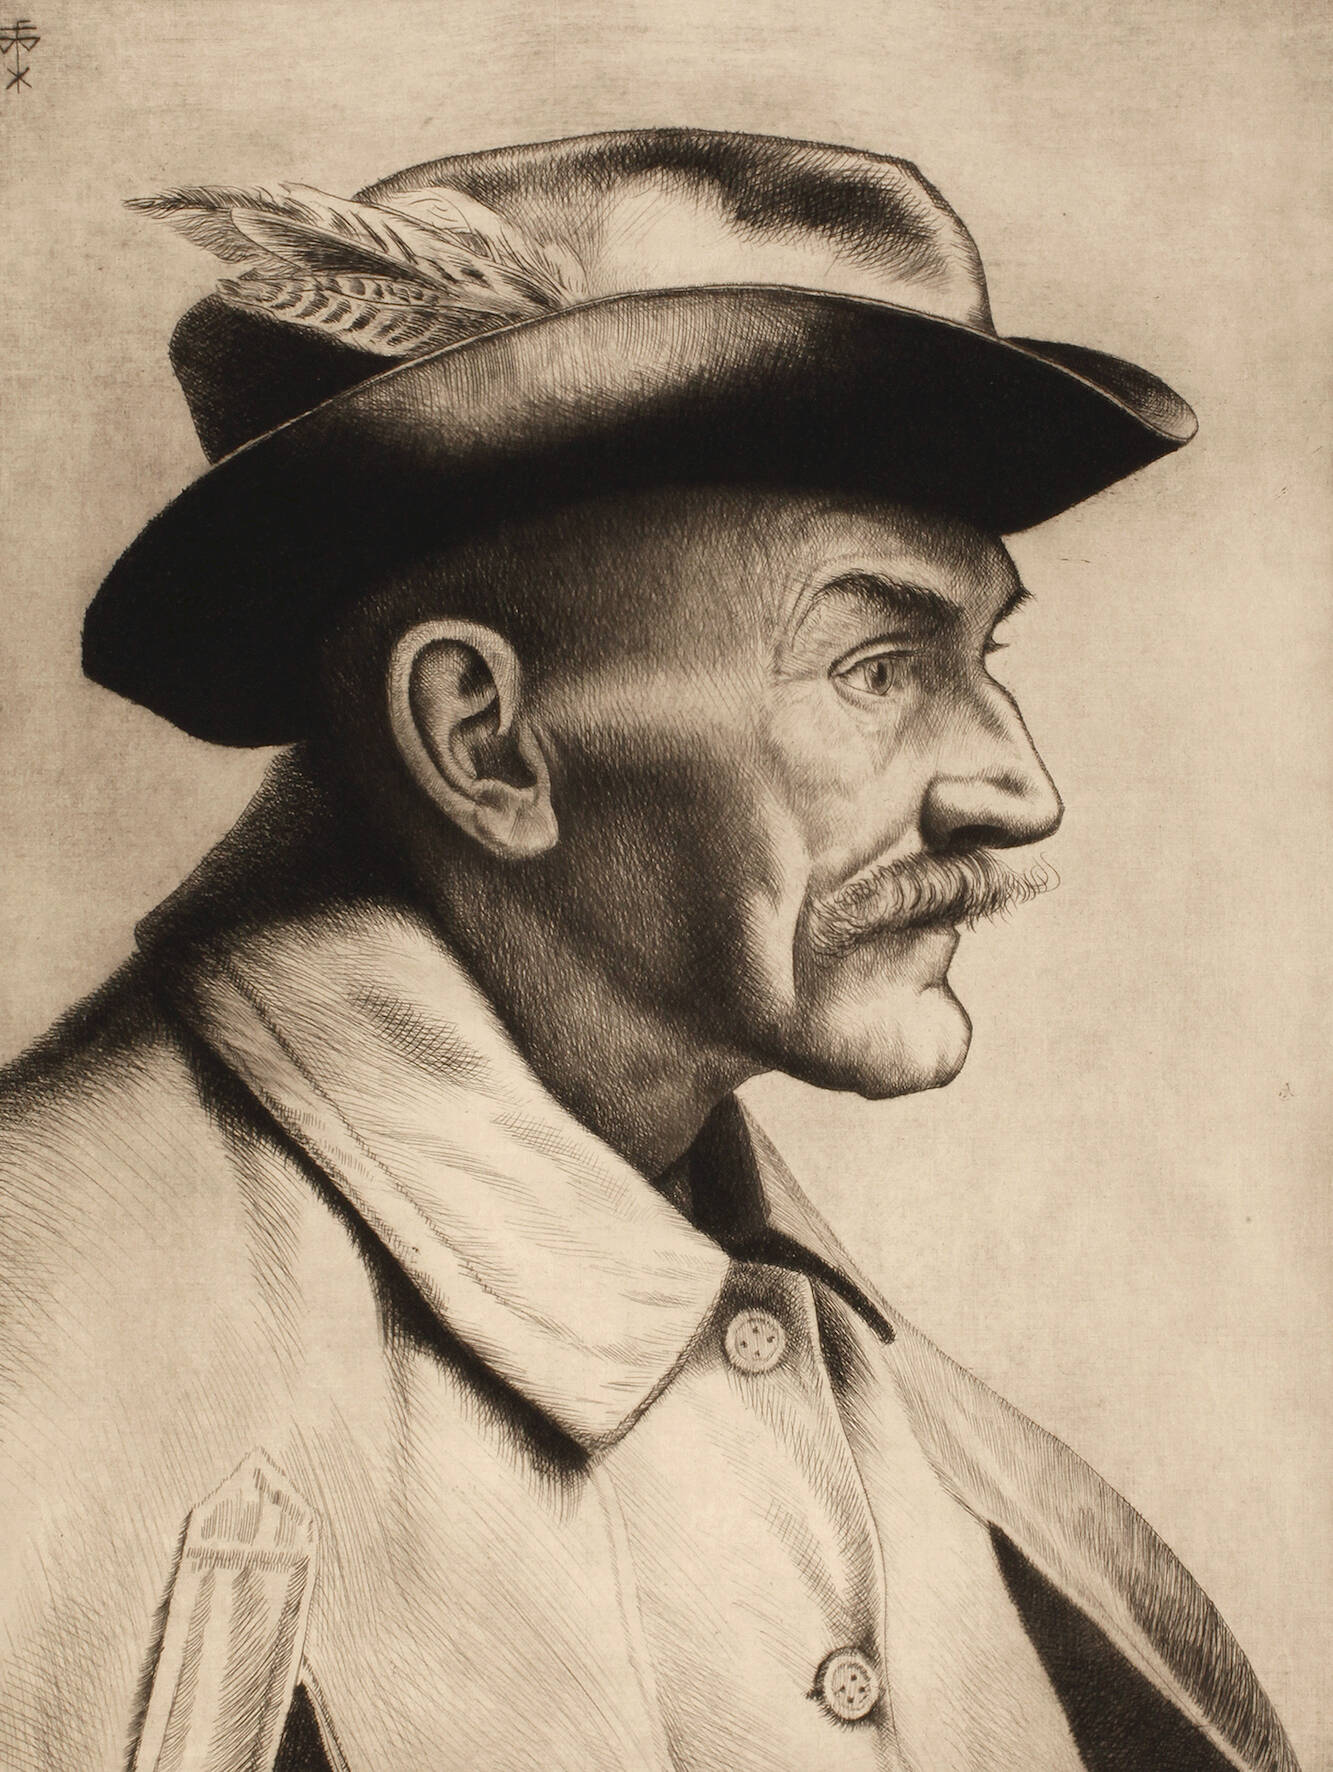 Walther Gasch, "Jäger"